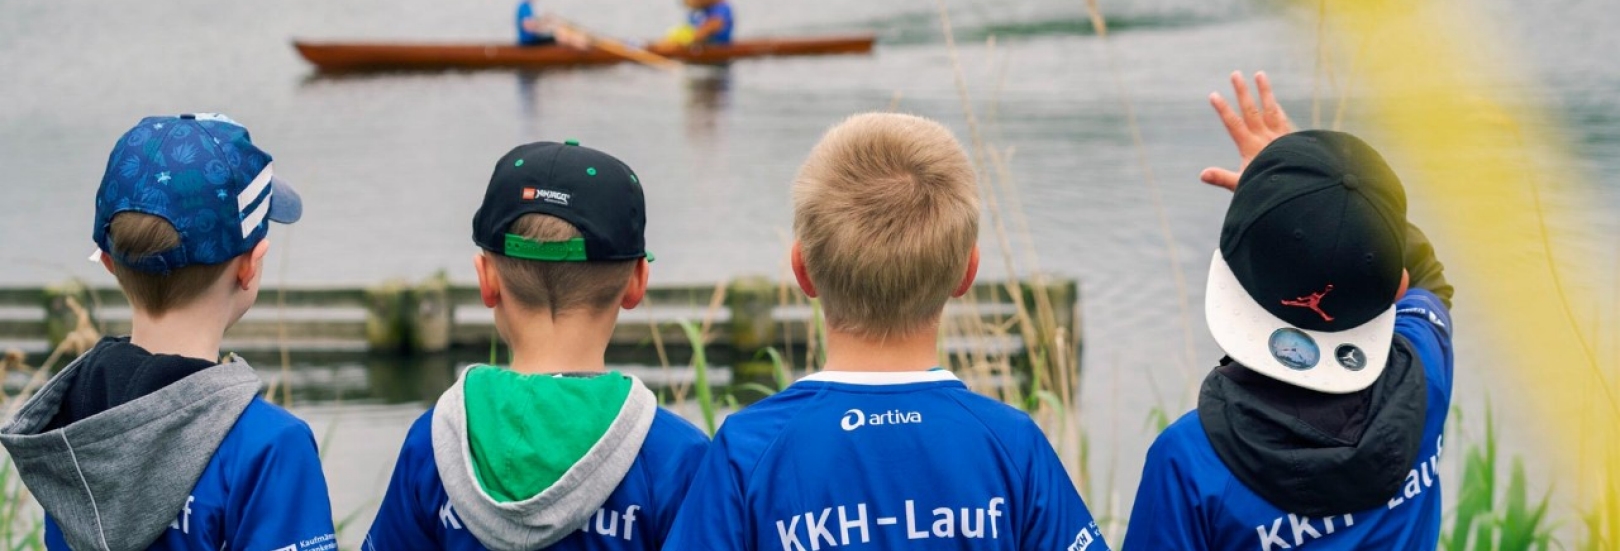 KKH-Lauf 2019 Rückblick